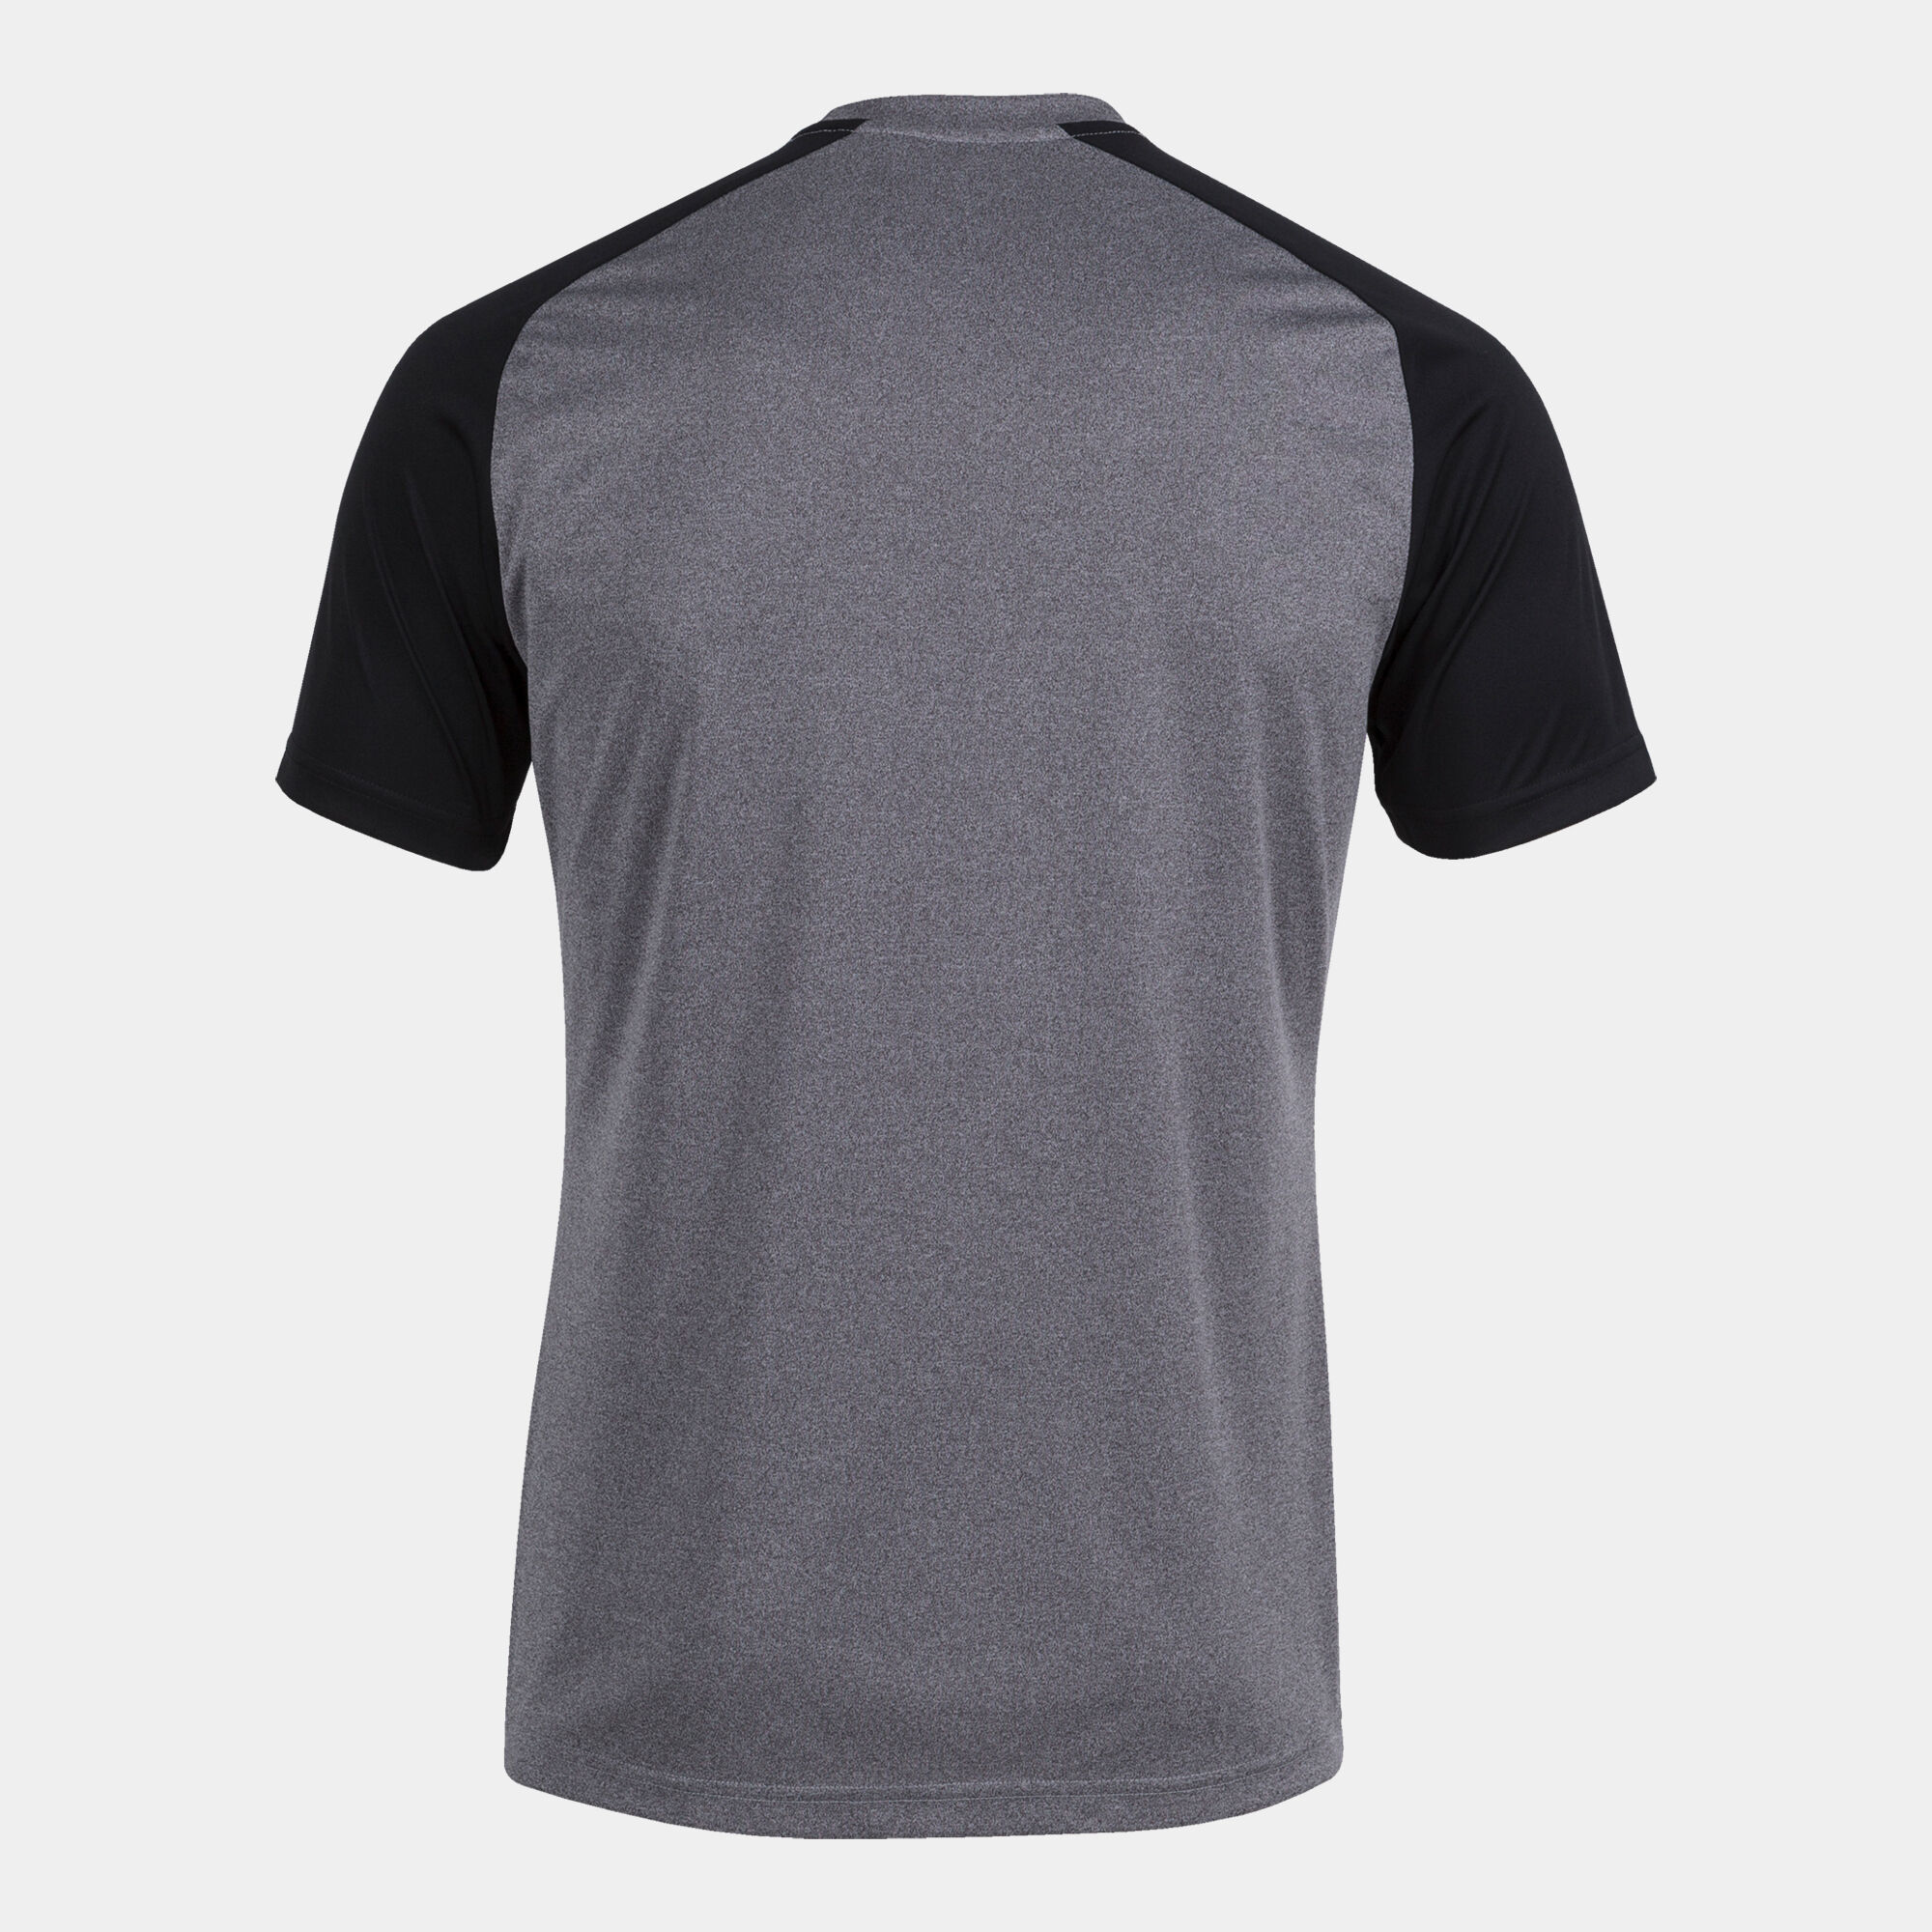 Shirt short sleeve man Academy IV melange gray black